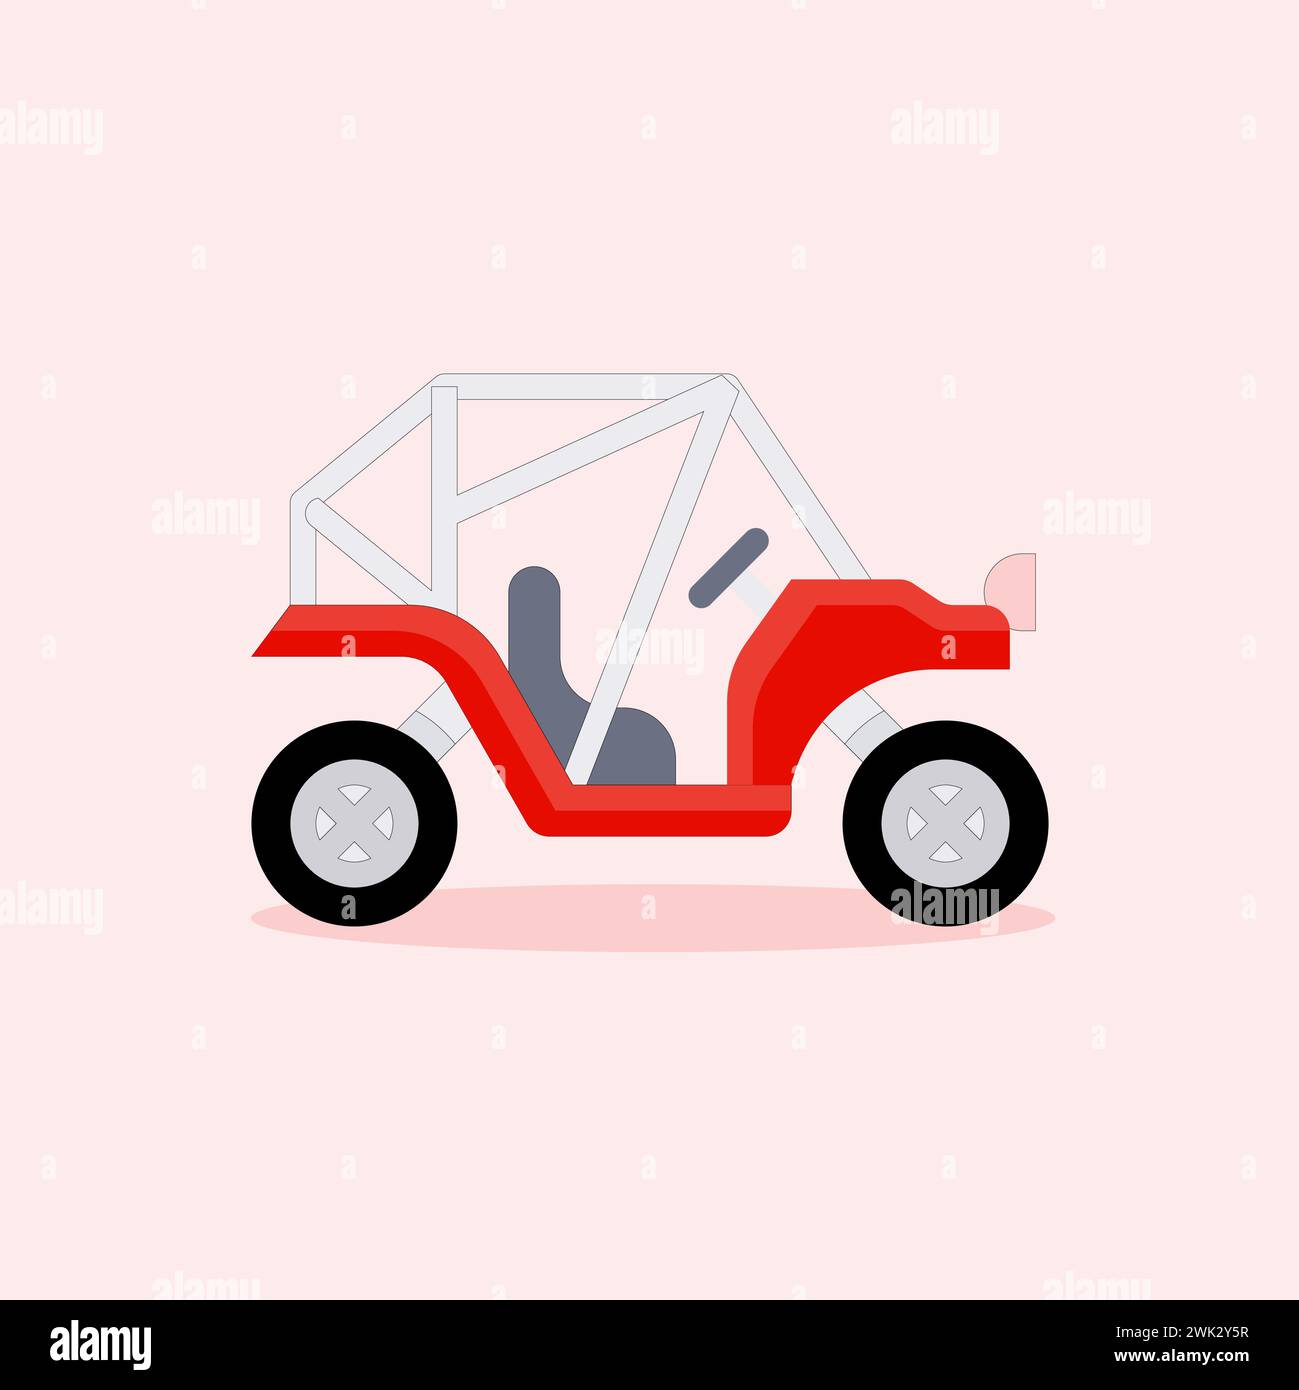 Art illustration icon logo flat cartoon transportation design symbol concept buggy car Stock Vector